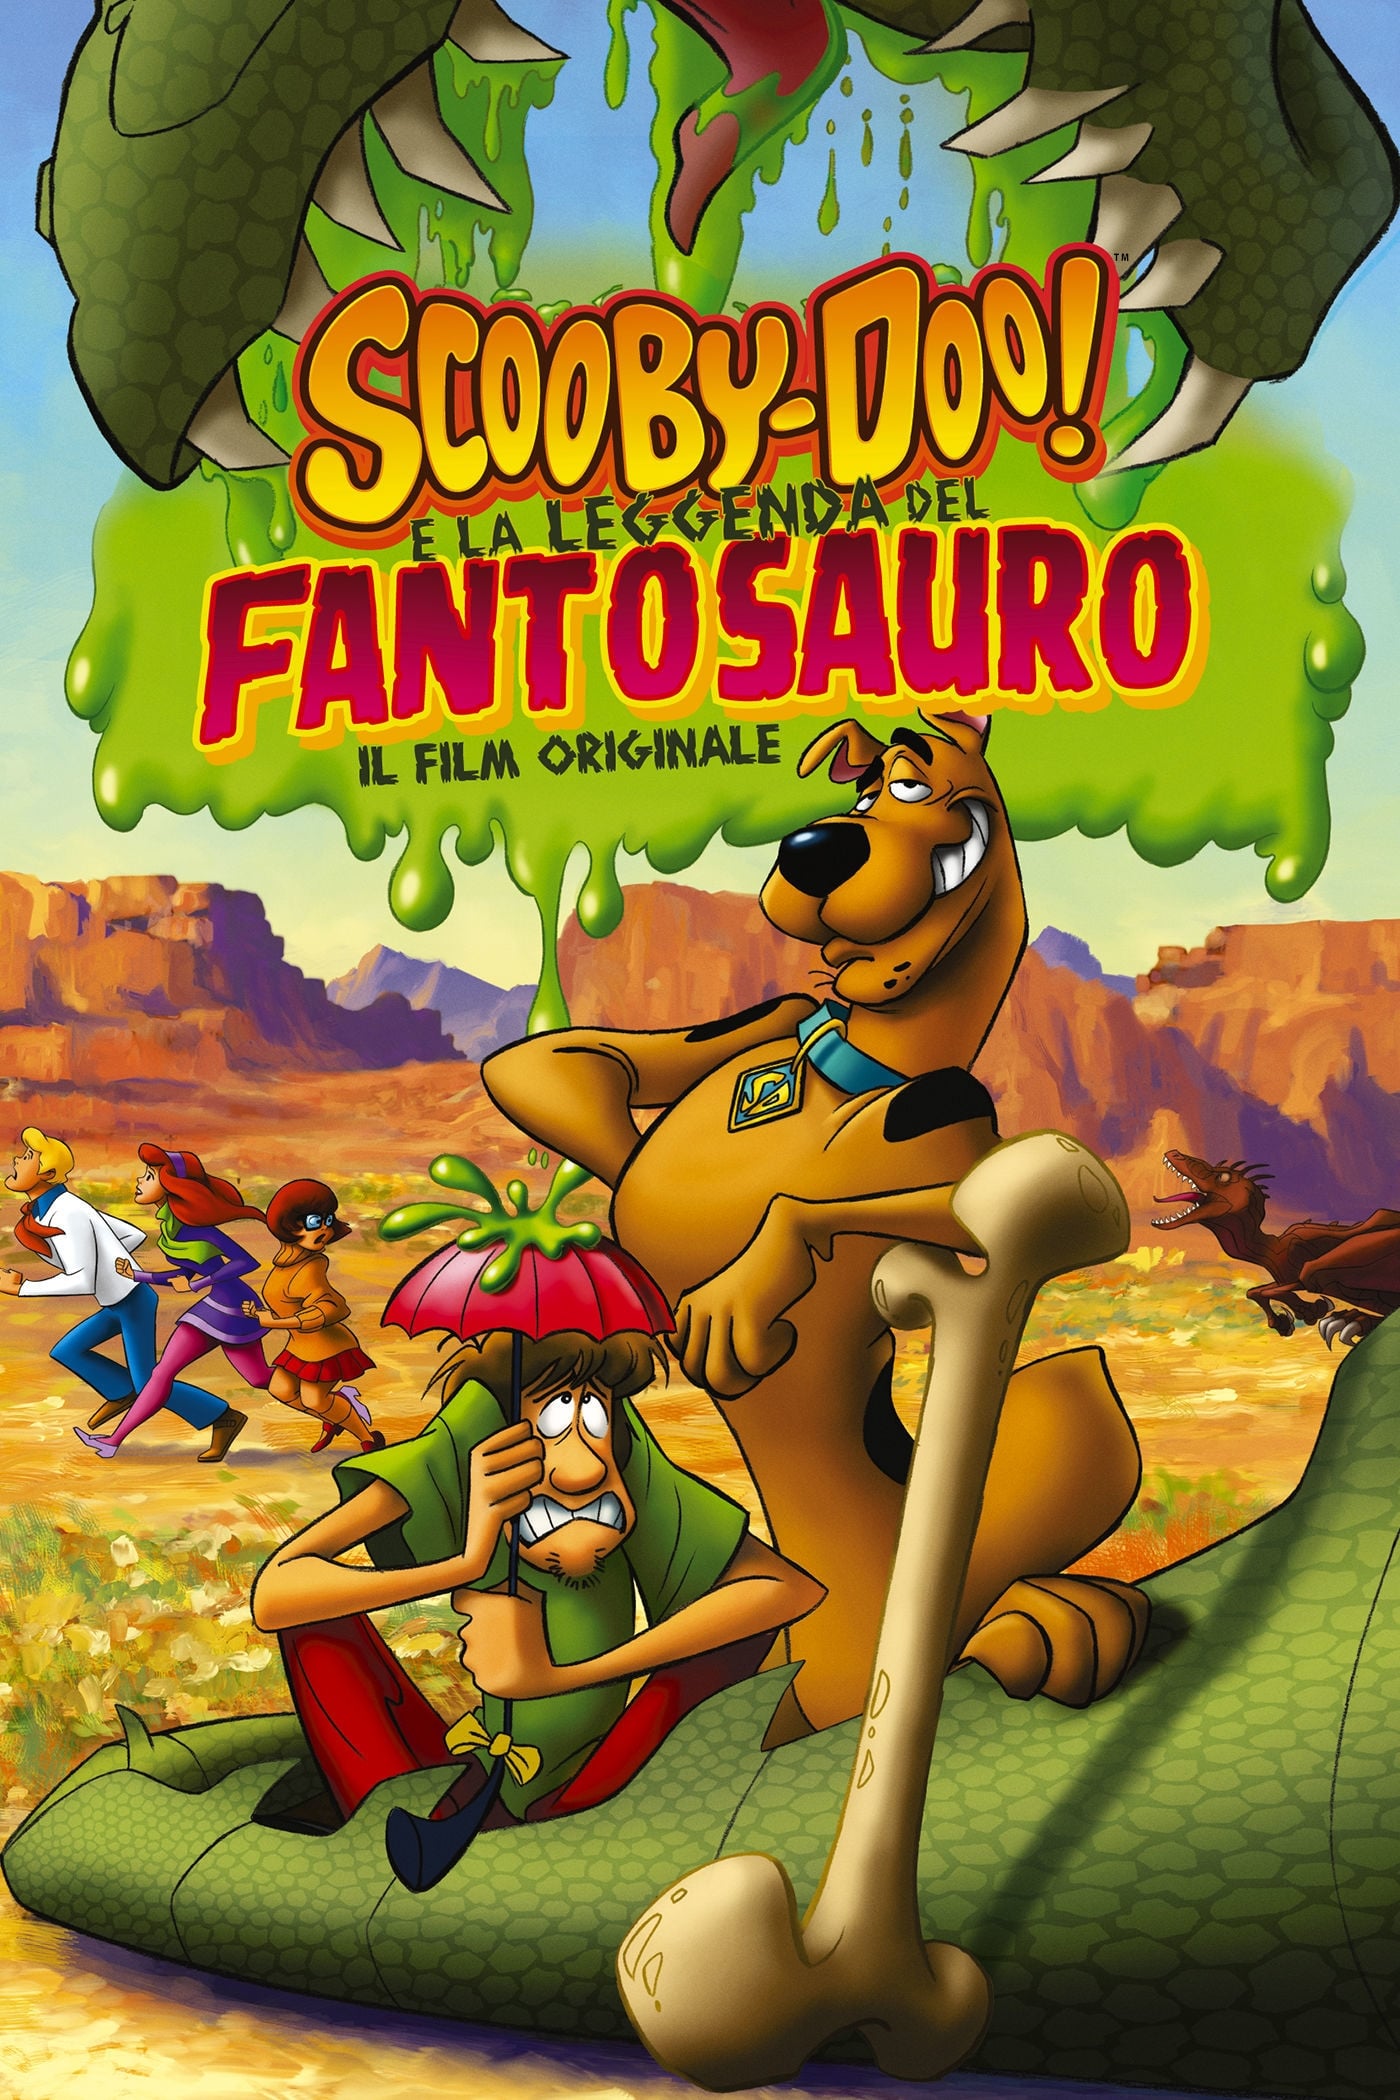 Scooby-Doo! e la leggenda del Fantosauro film